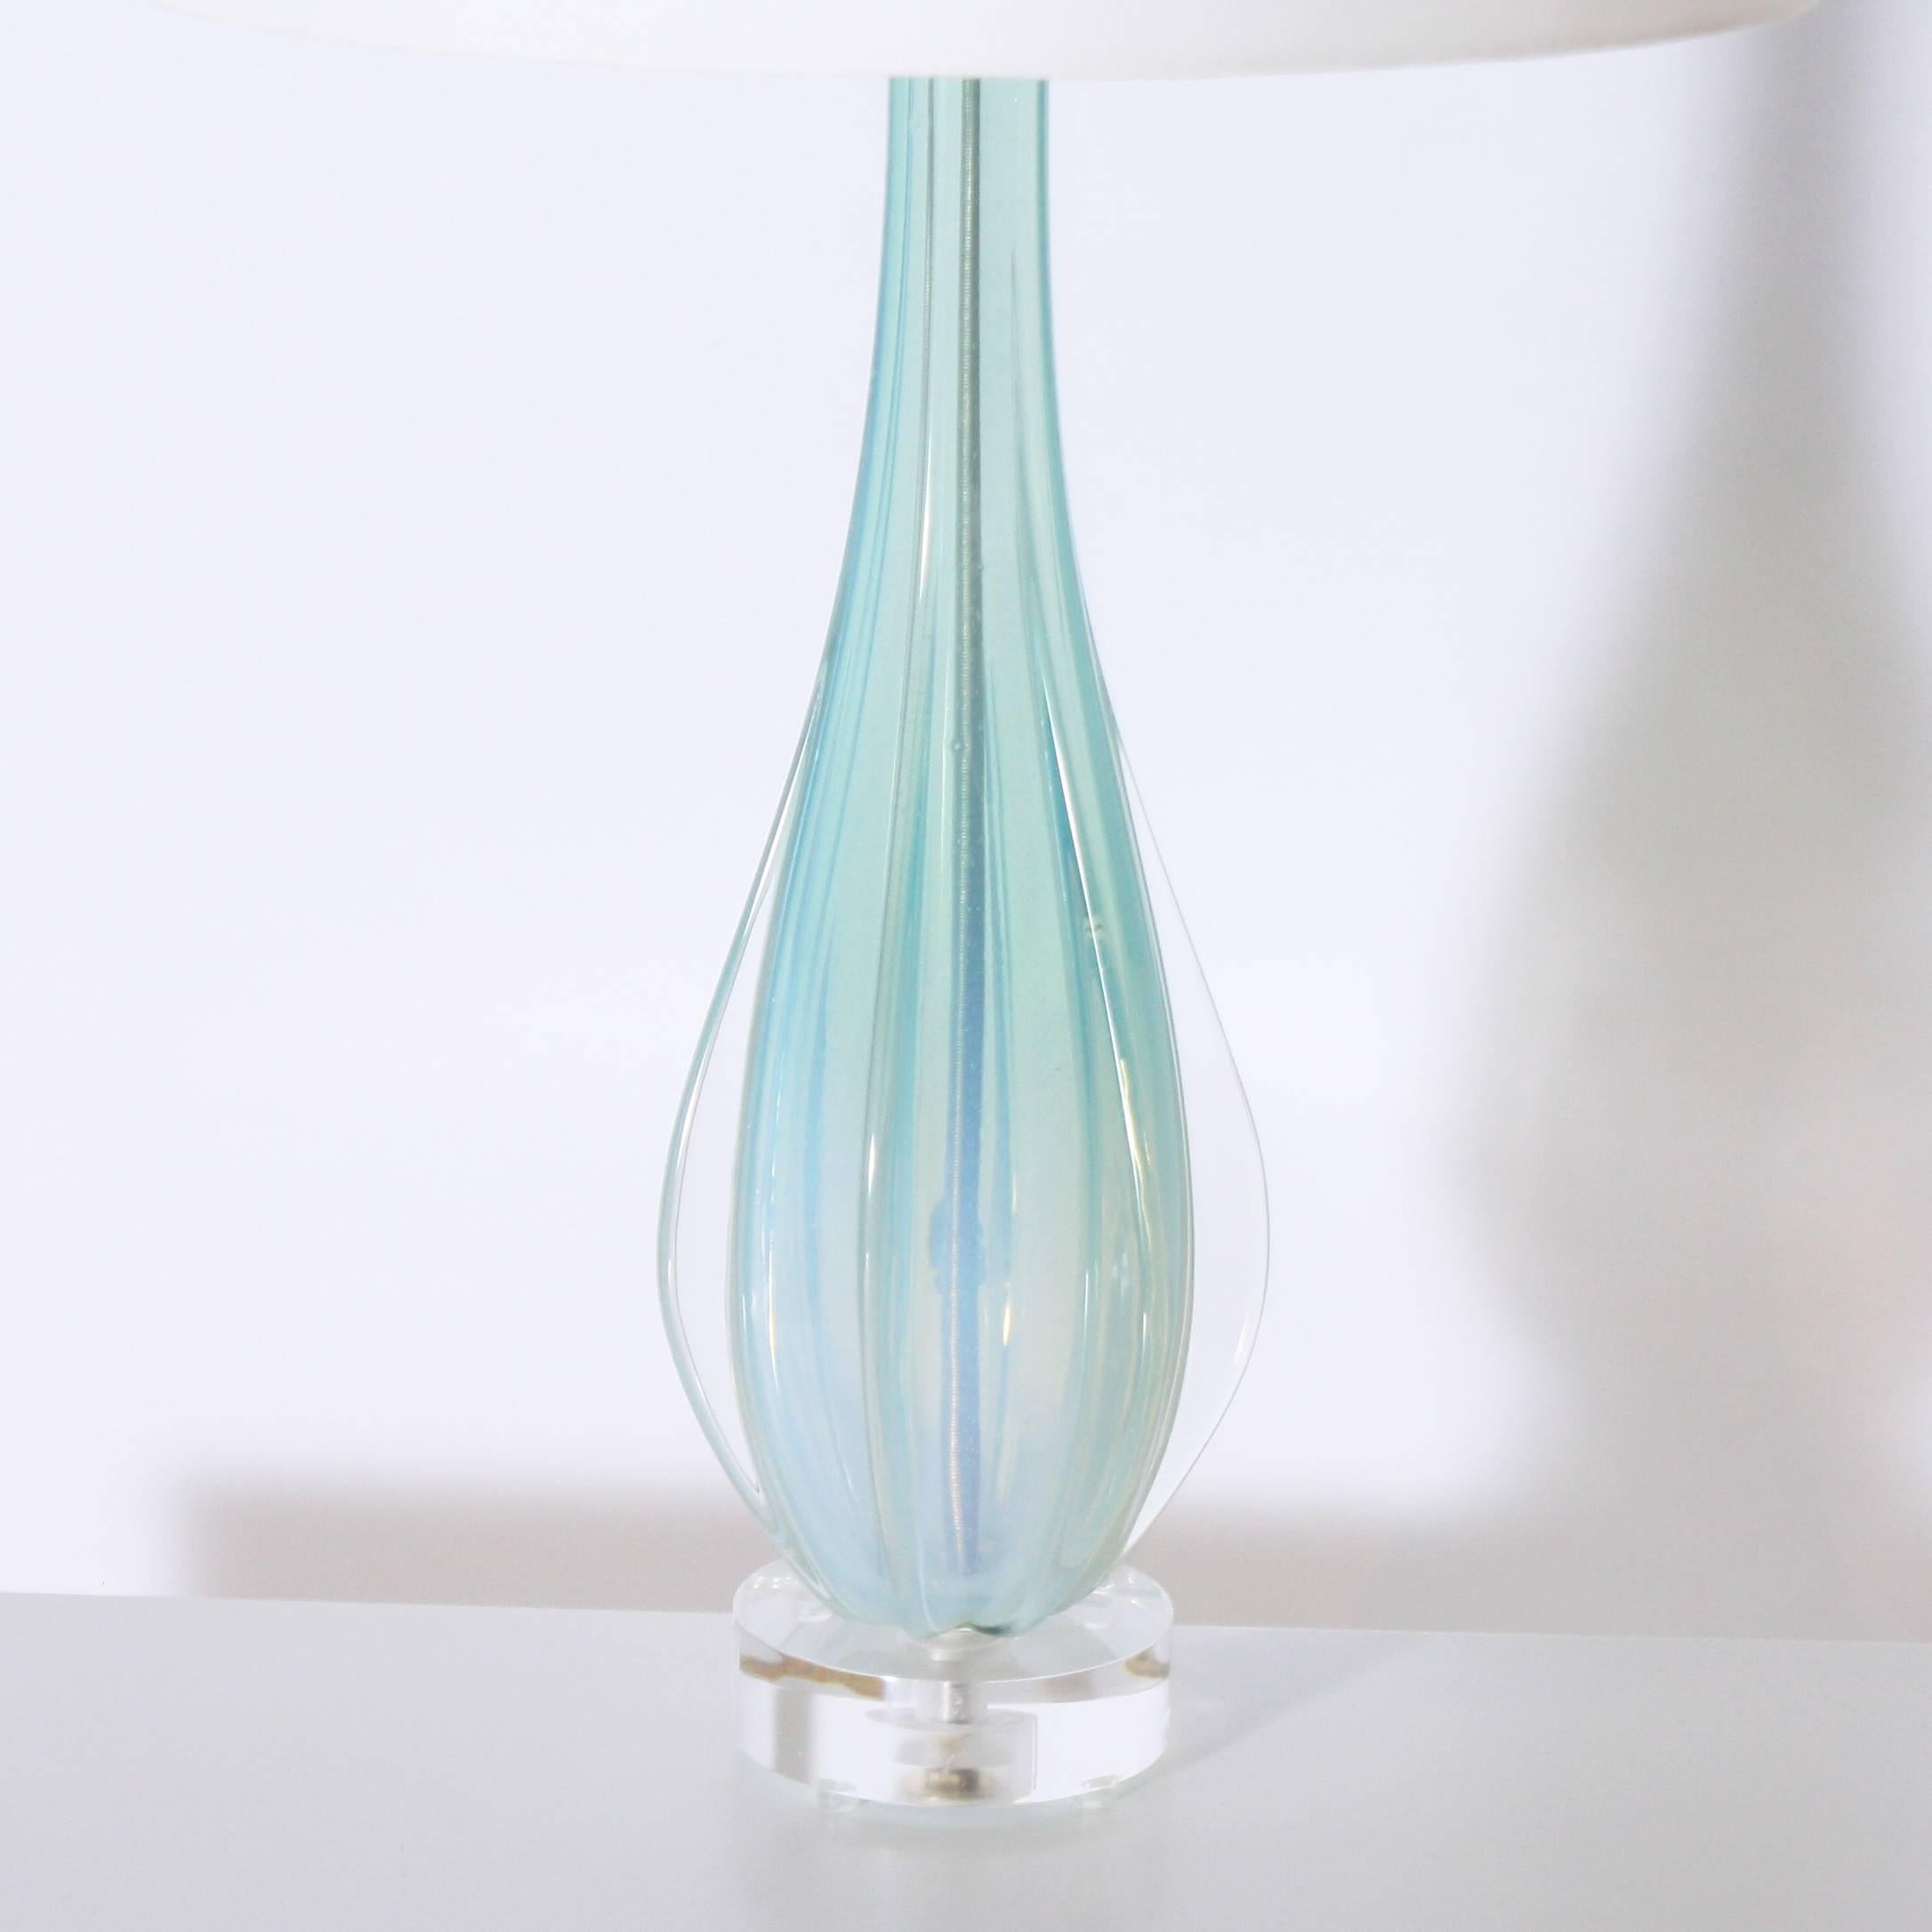 Pale blue opaline Murano glass lamp by Seguso, circa 1950.
     